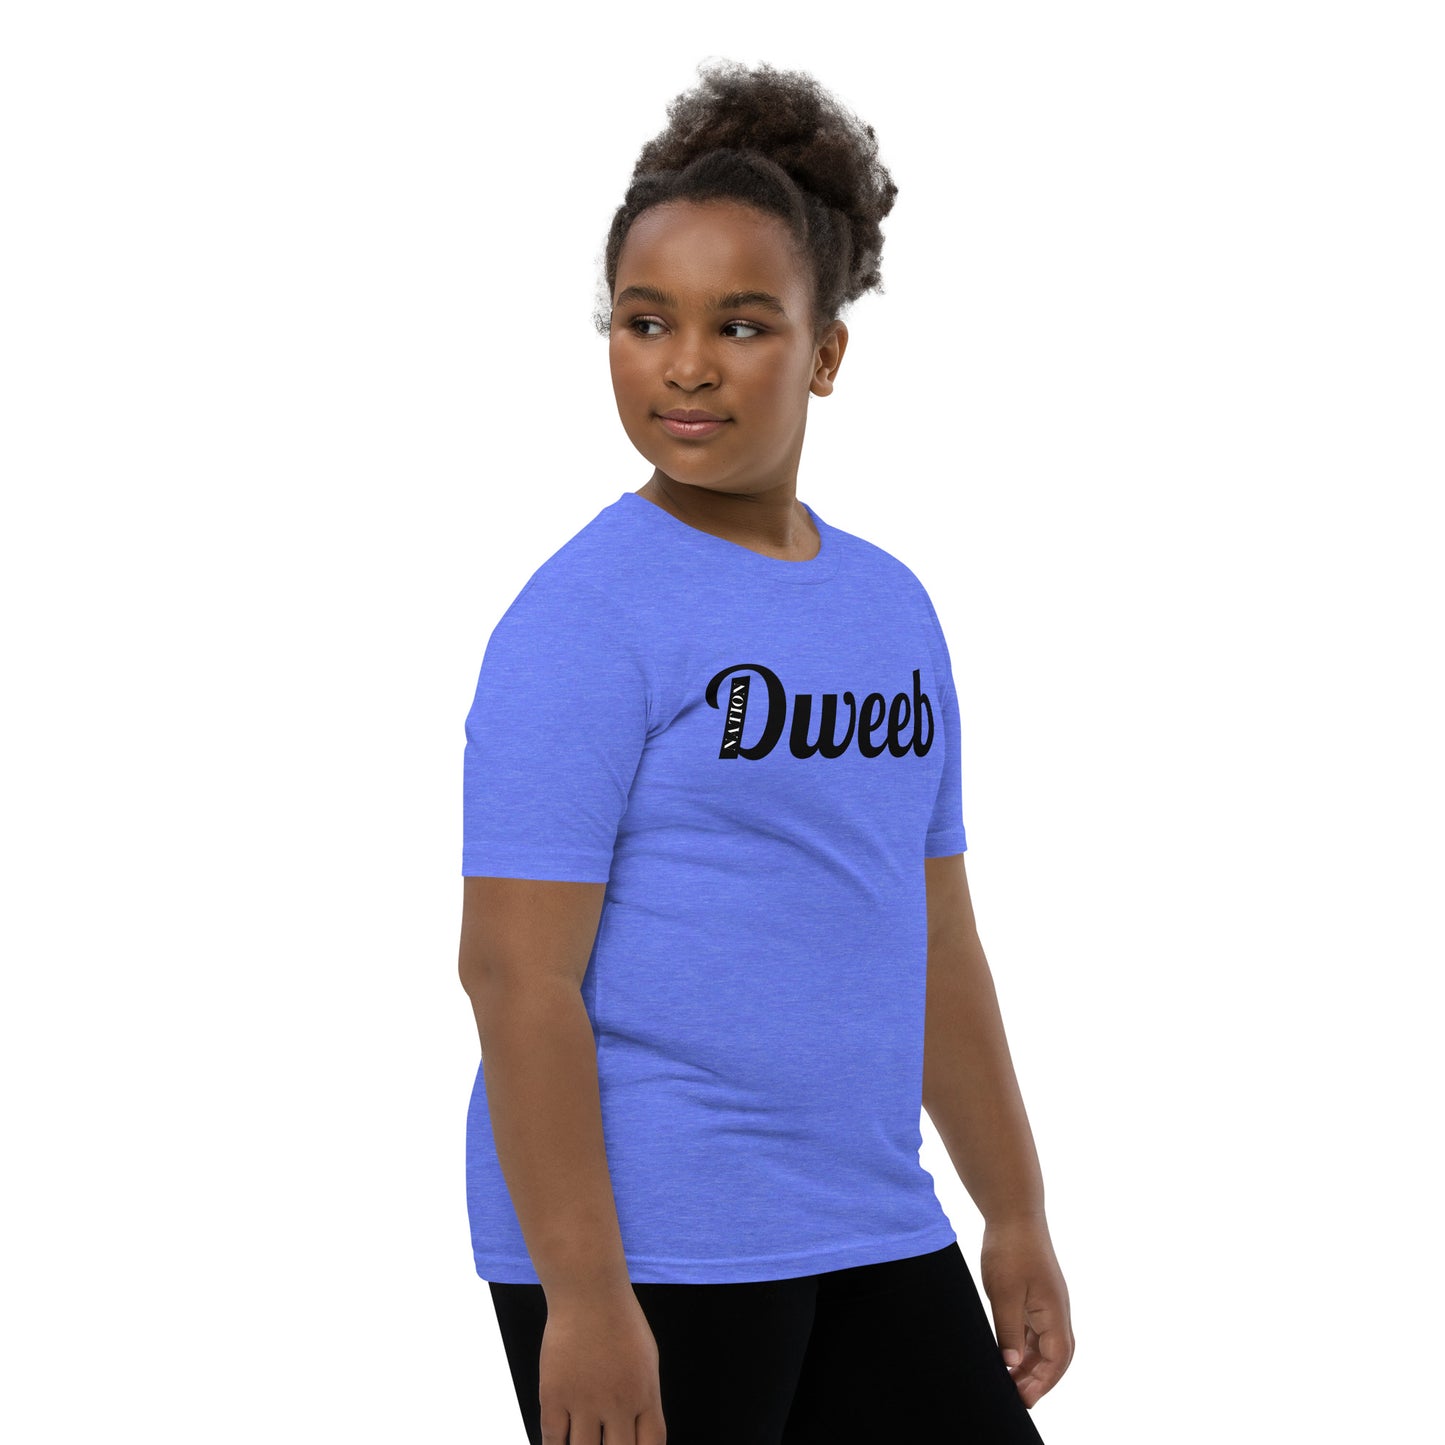 Dweeb Nation Classic T-Shirt - Youth